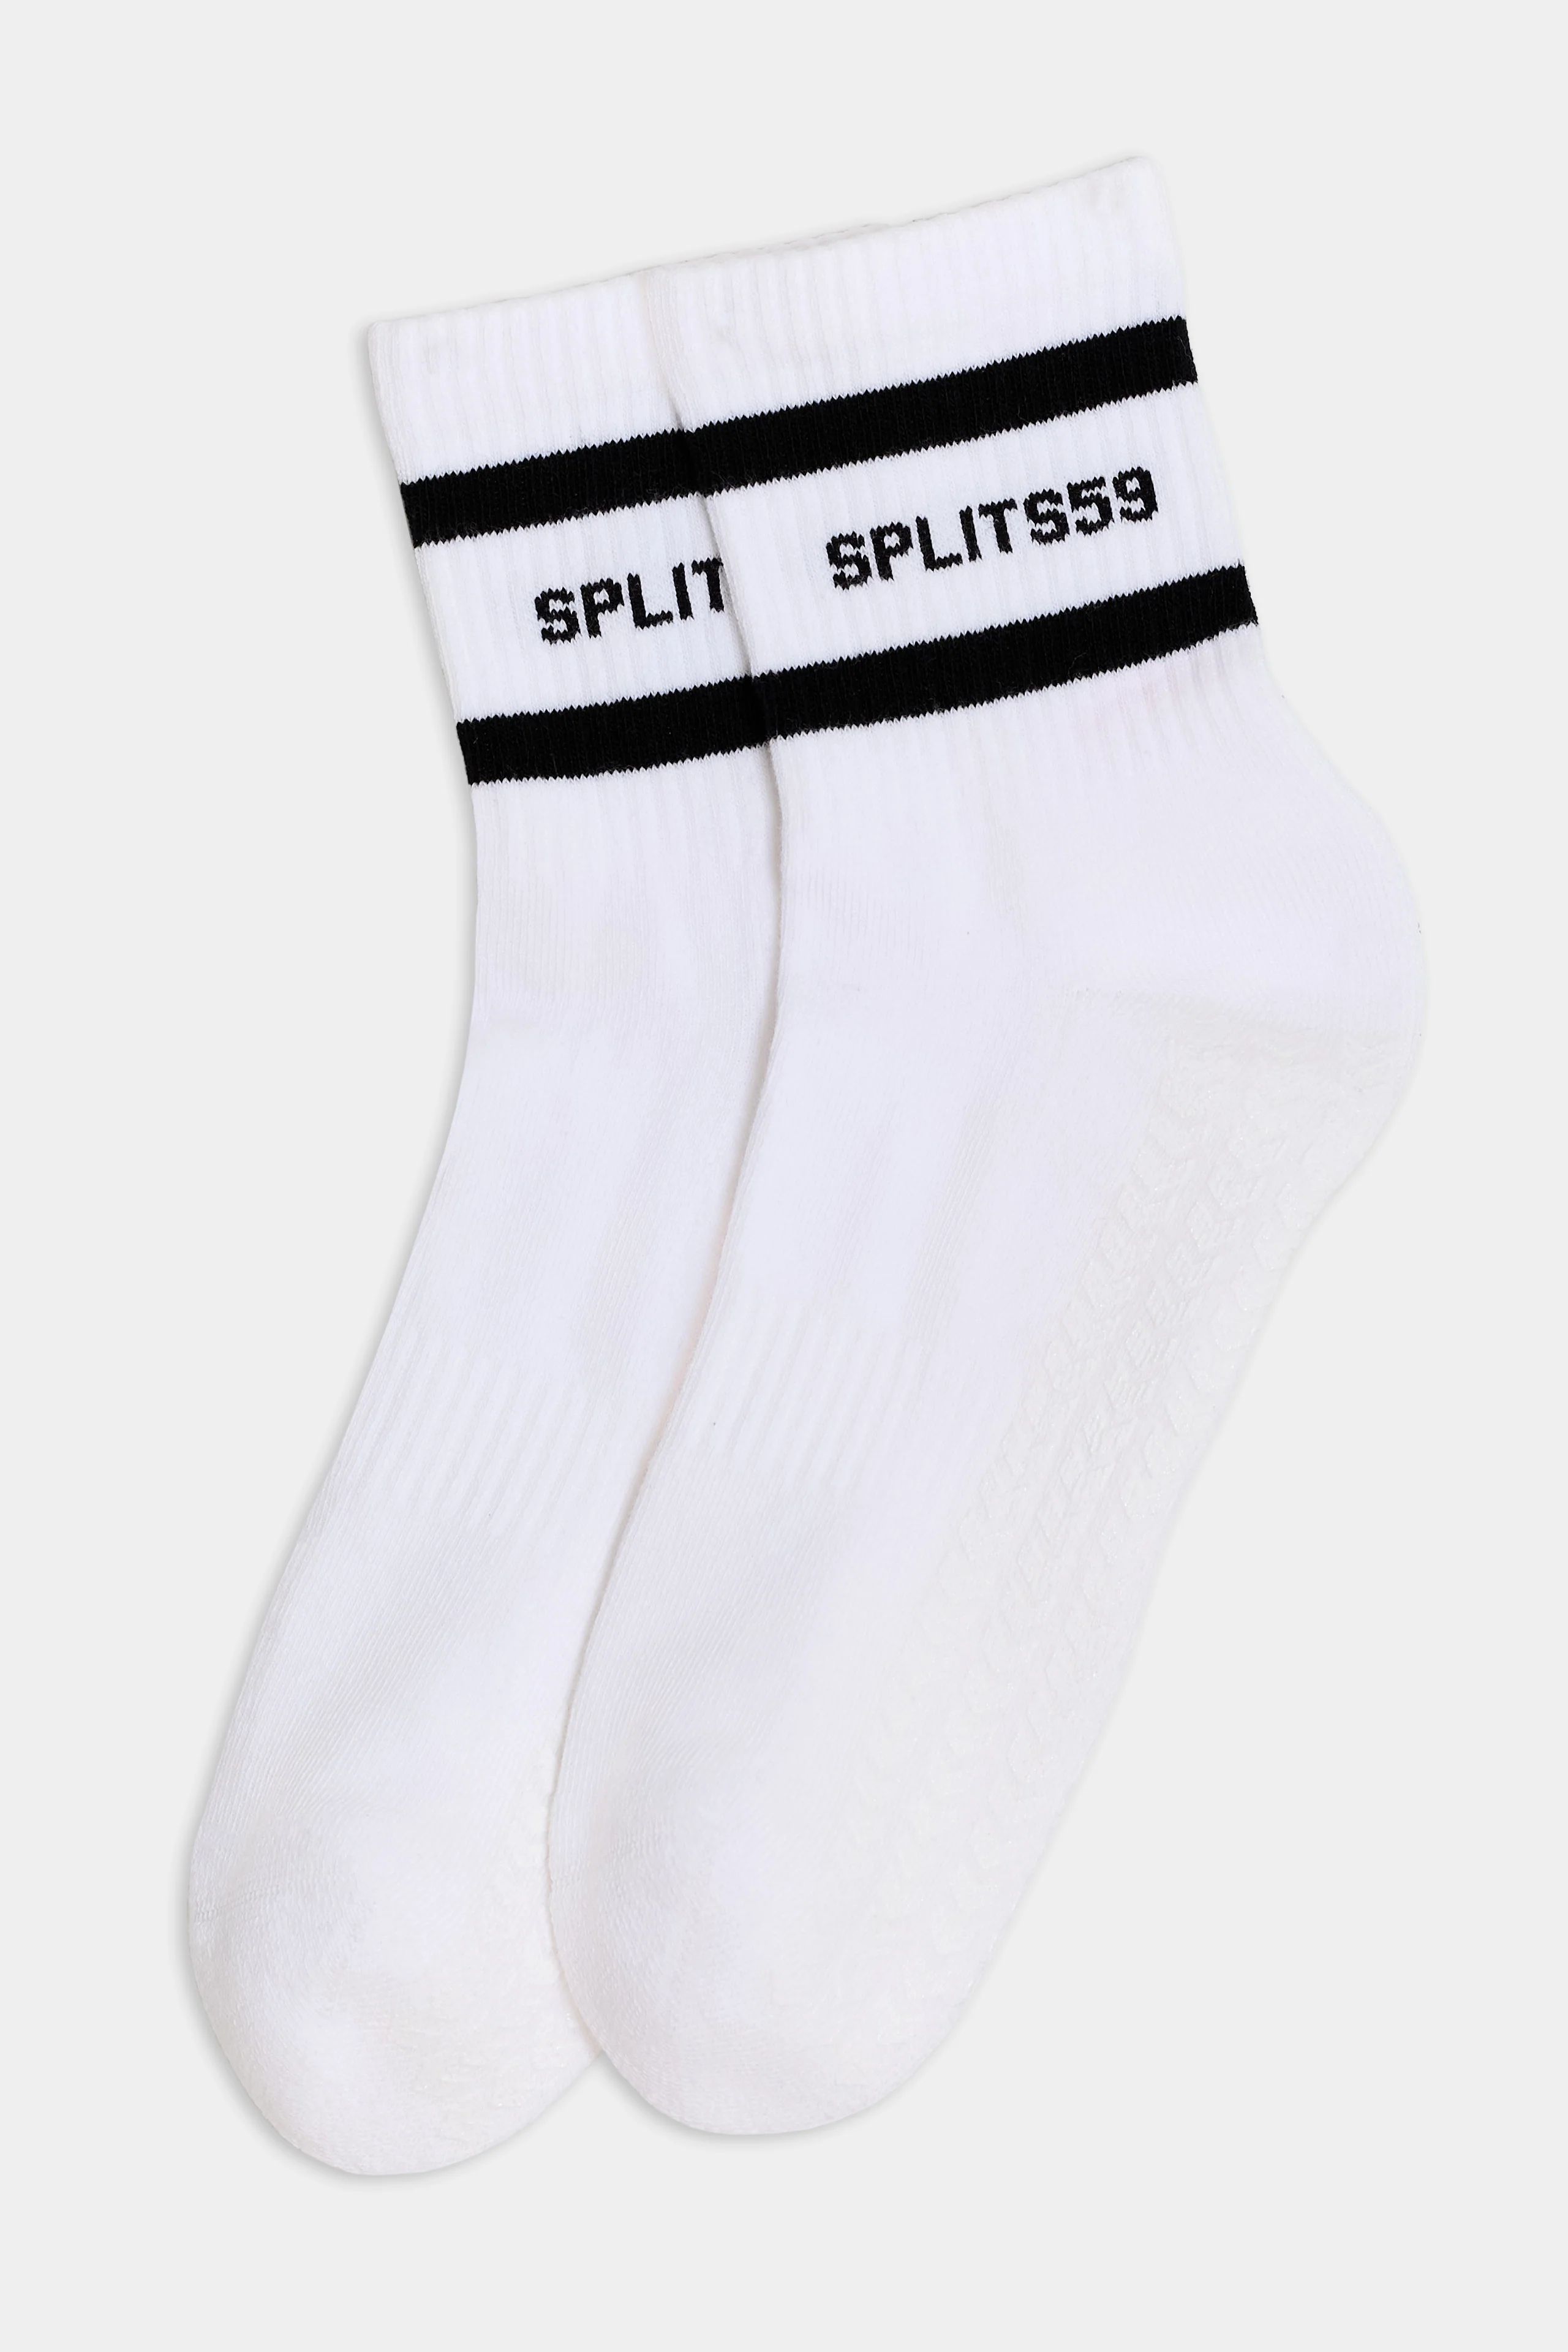 Logo Stripe Ankle Socks with Grip | Splits59.com